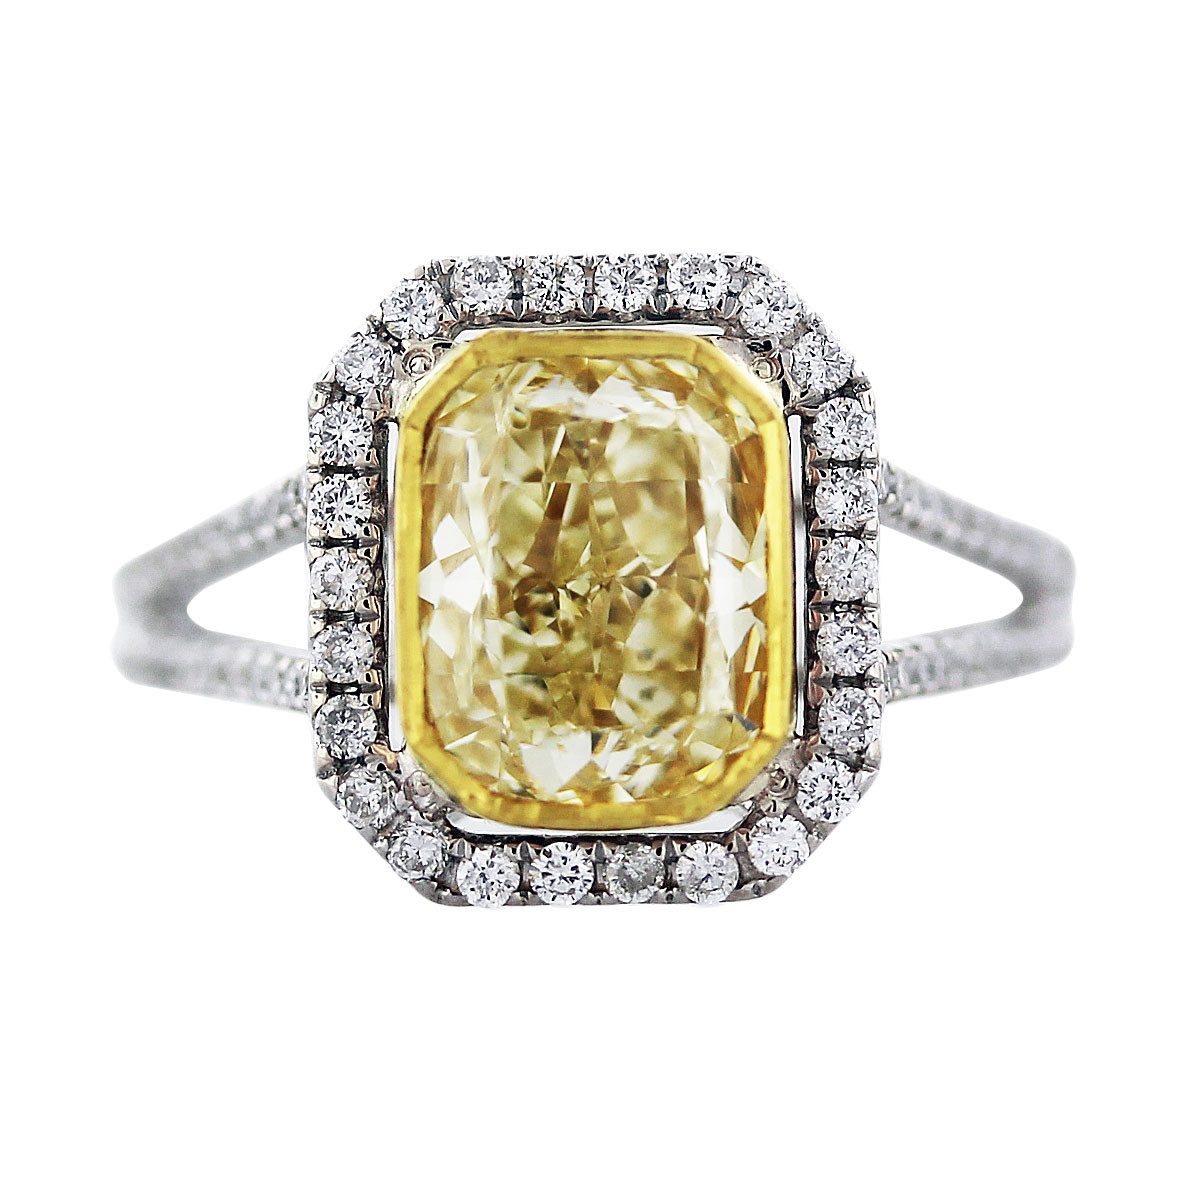 Yellow Diamond Engagement Ring
 Cushion Cut Fancy Yellow Diamond Engagement Ring in 18K